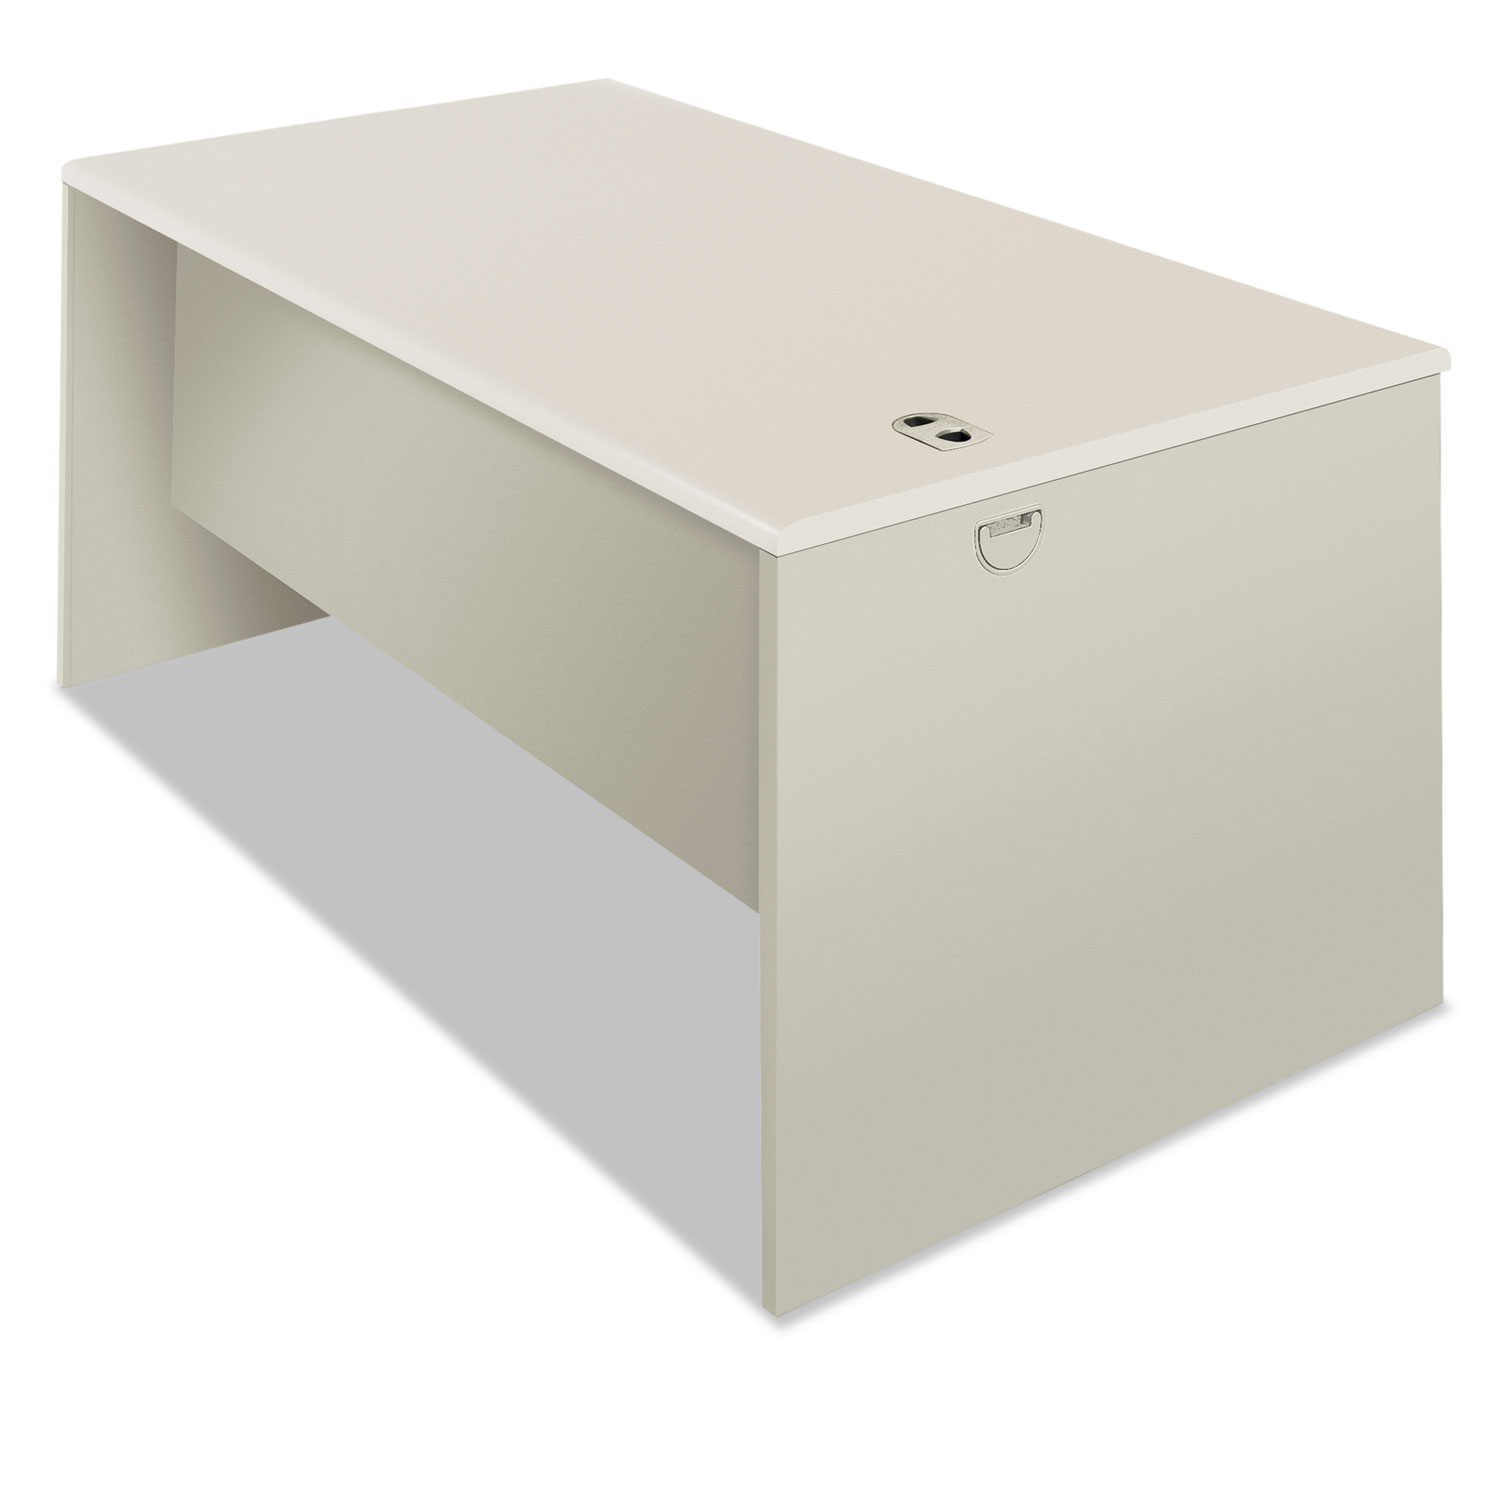  HON H38932.B9.Q 38000 Series Desk Shell, Radius Edge, 60w x 30d x 30h, Silver Mesh/Light Gray (HON38932B9Q) 